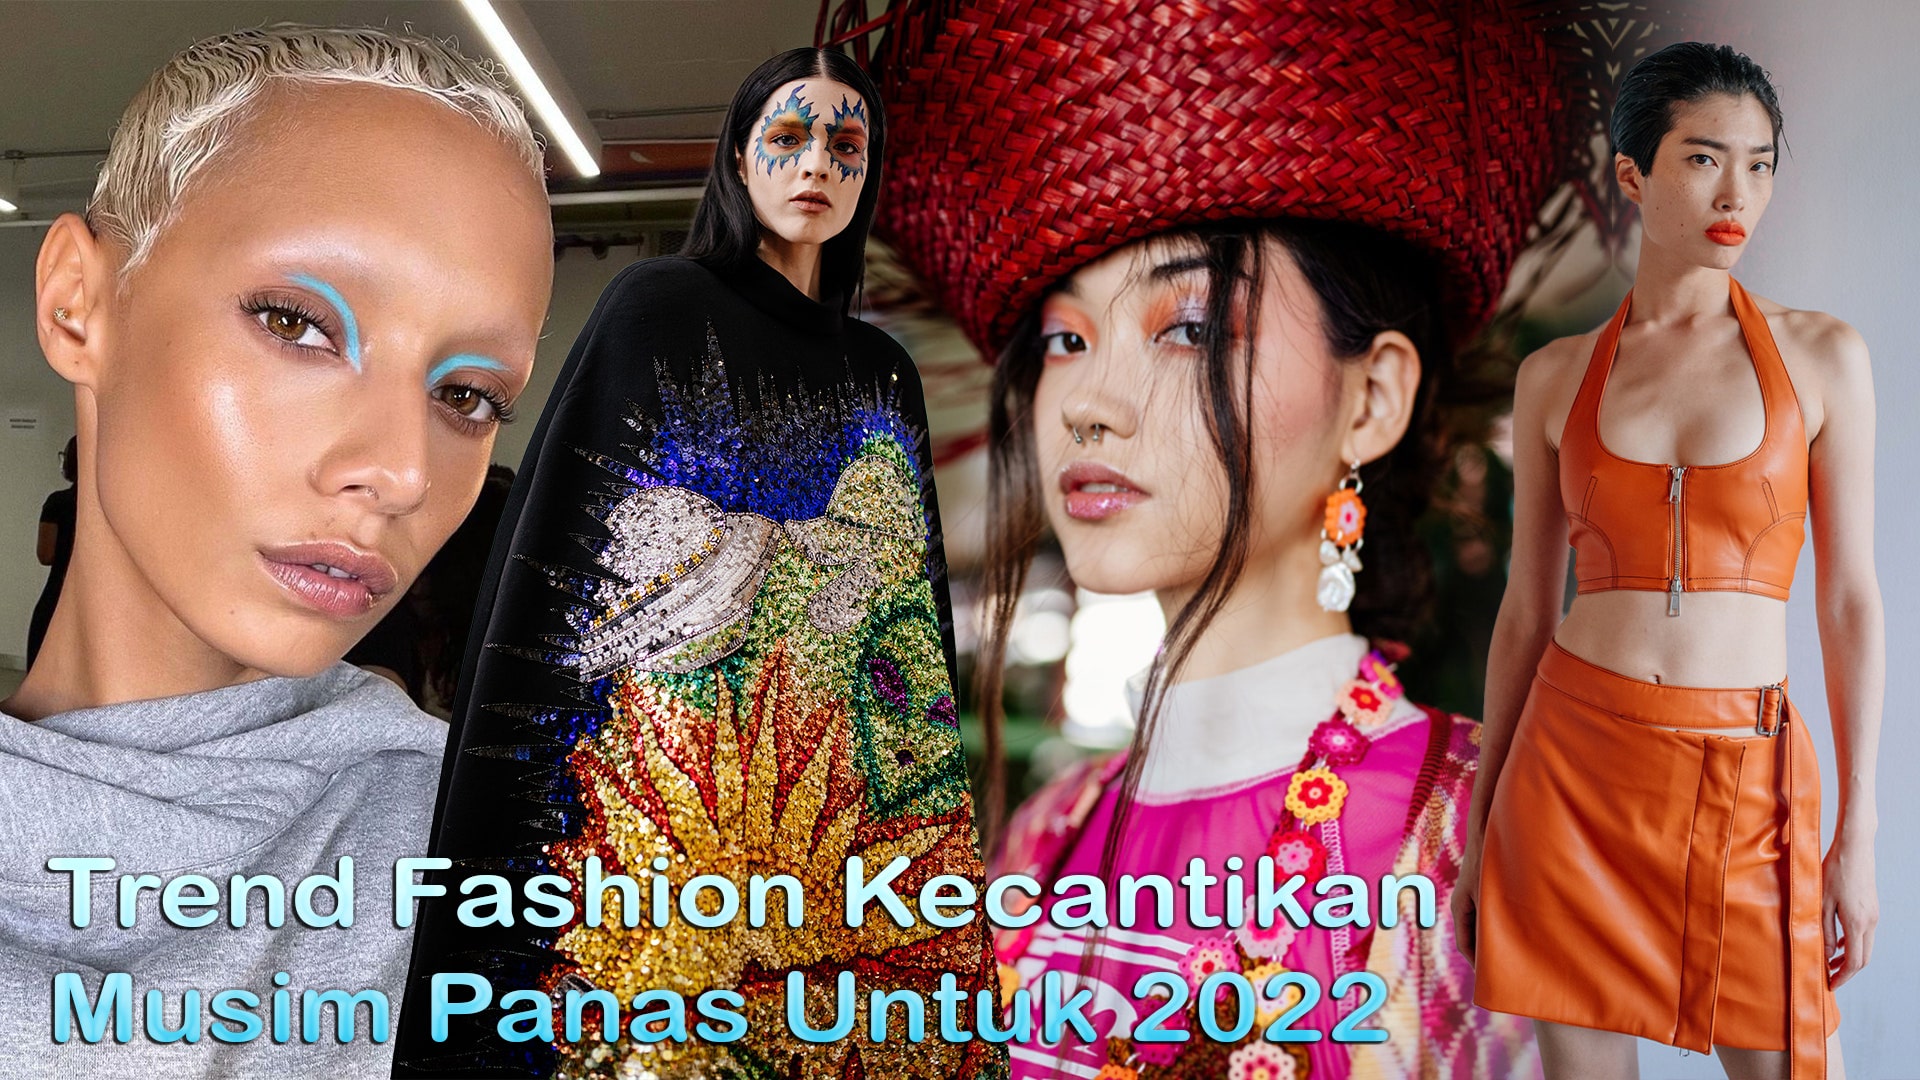 Trend Fashion Kecantikan Musim Panas Untuk 2022